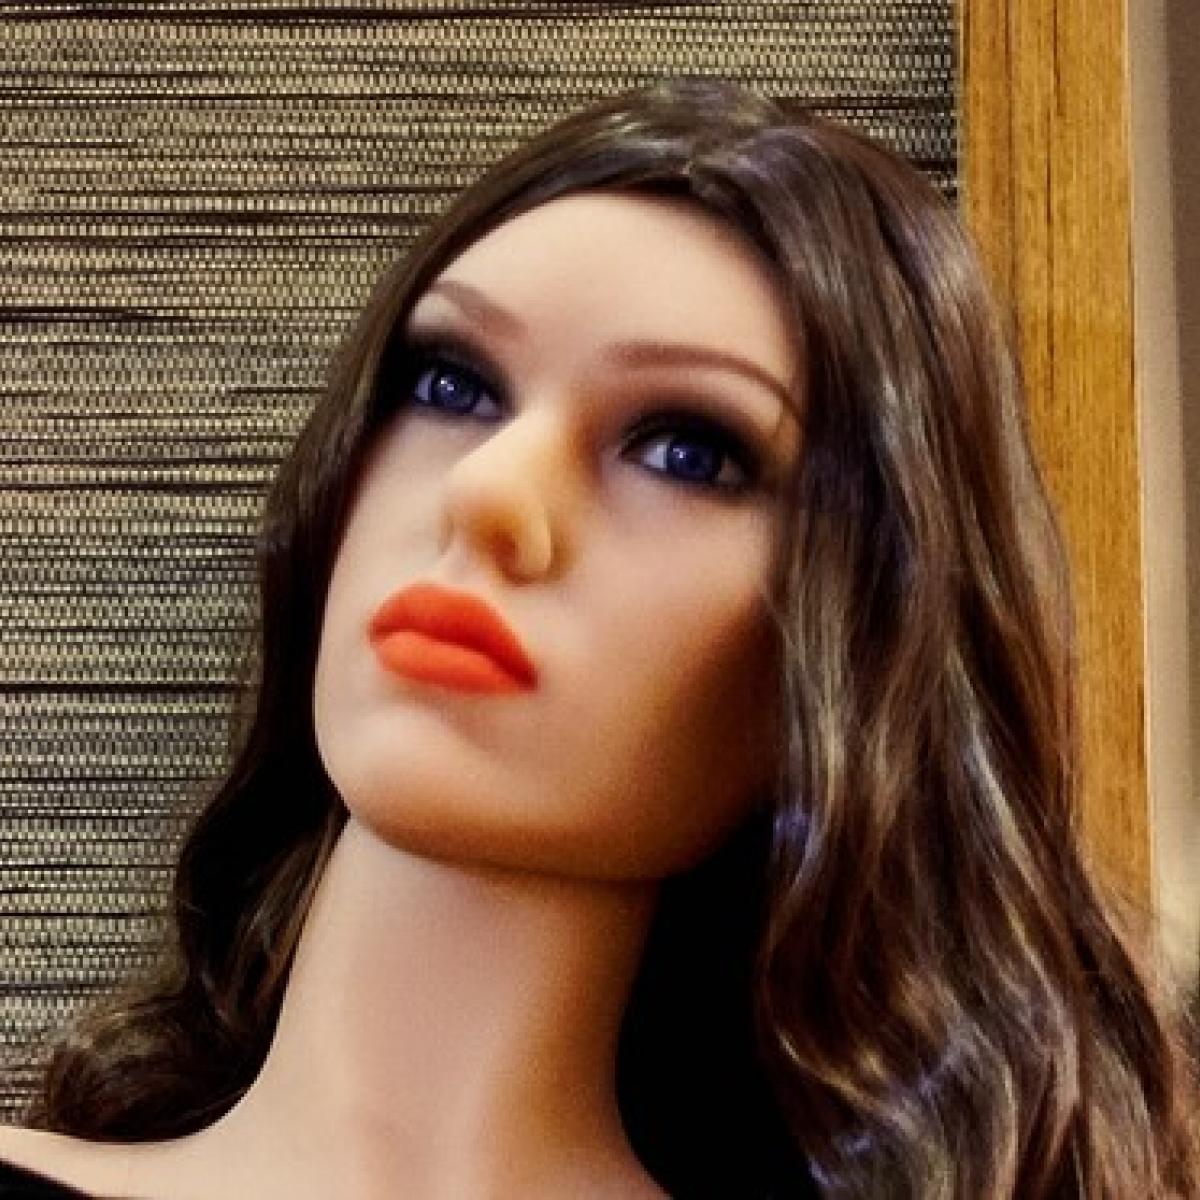 Neodoll Racy Sophia - Sex Doll Head - M16 Compatible - Tan